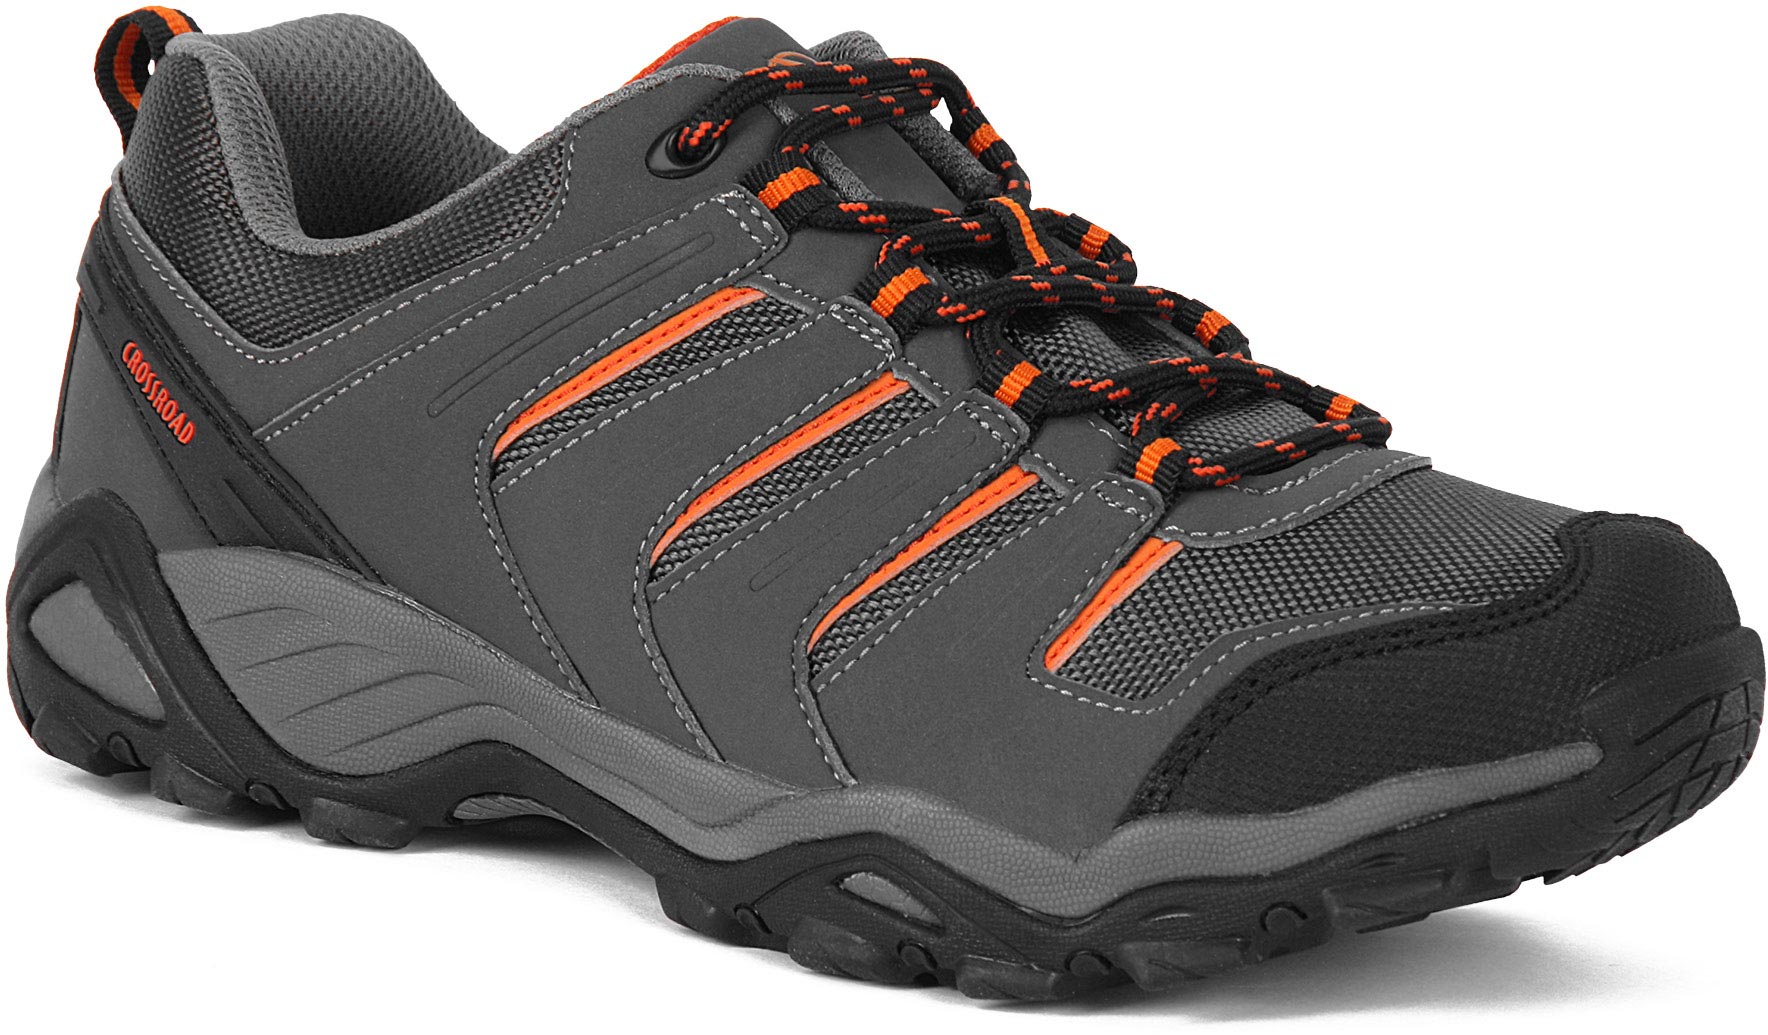 Unisex trekking shoes